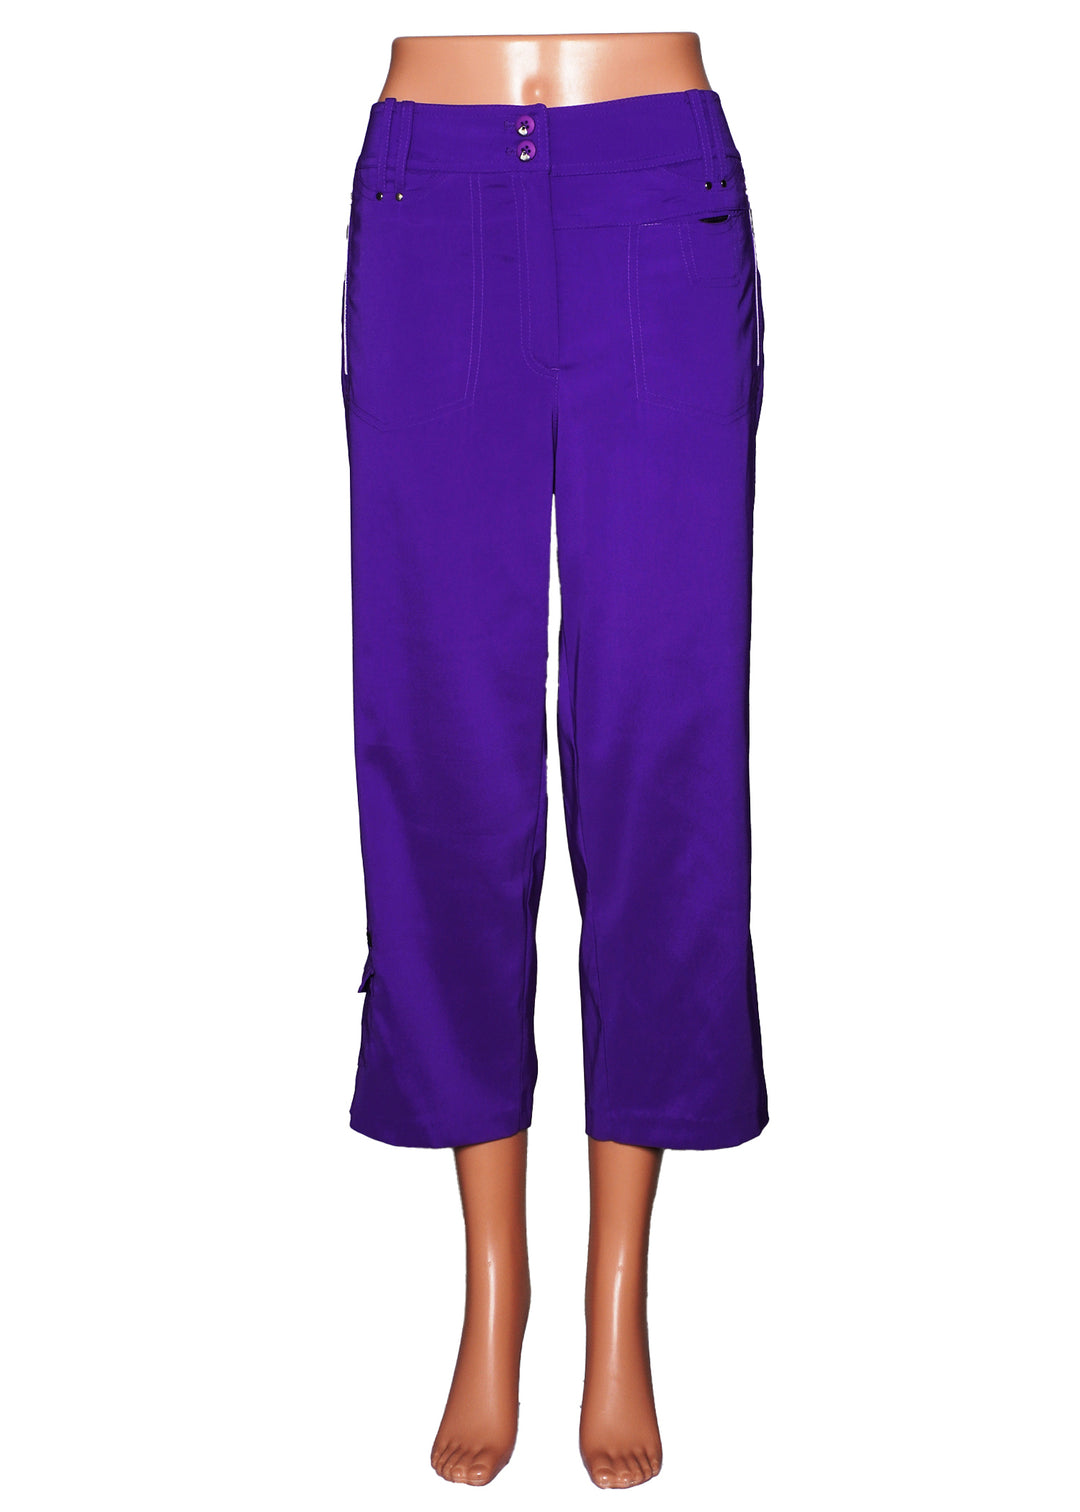 Jaime Sadock Solid Capri - Purple - Size 10